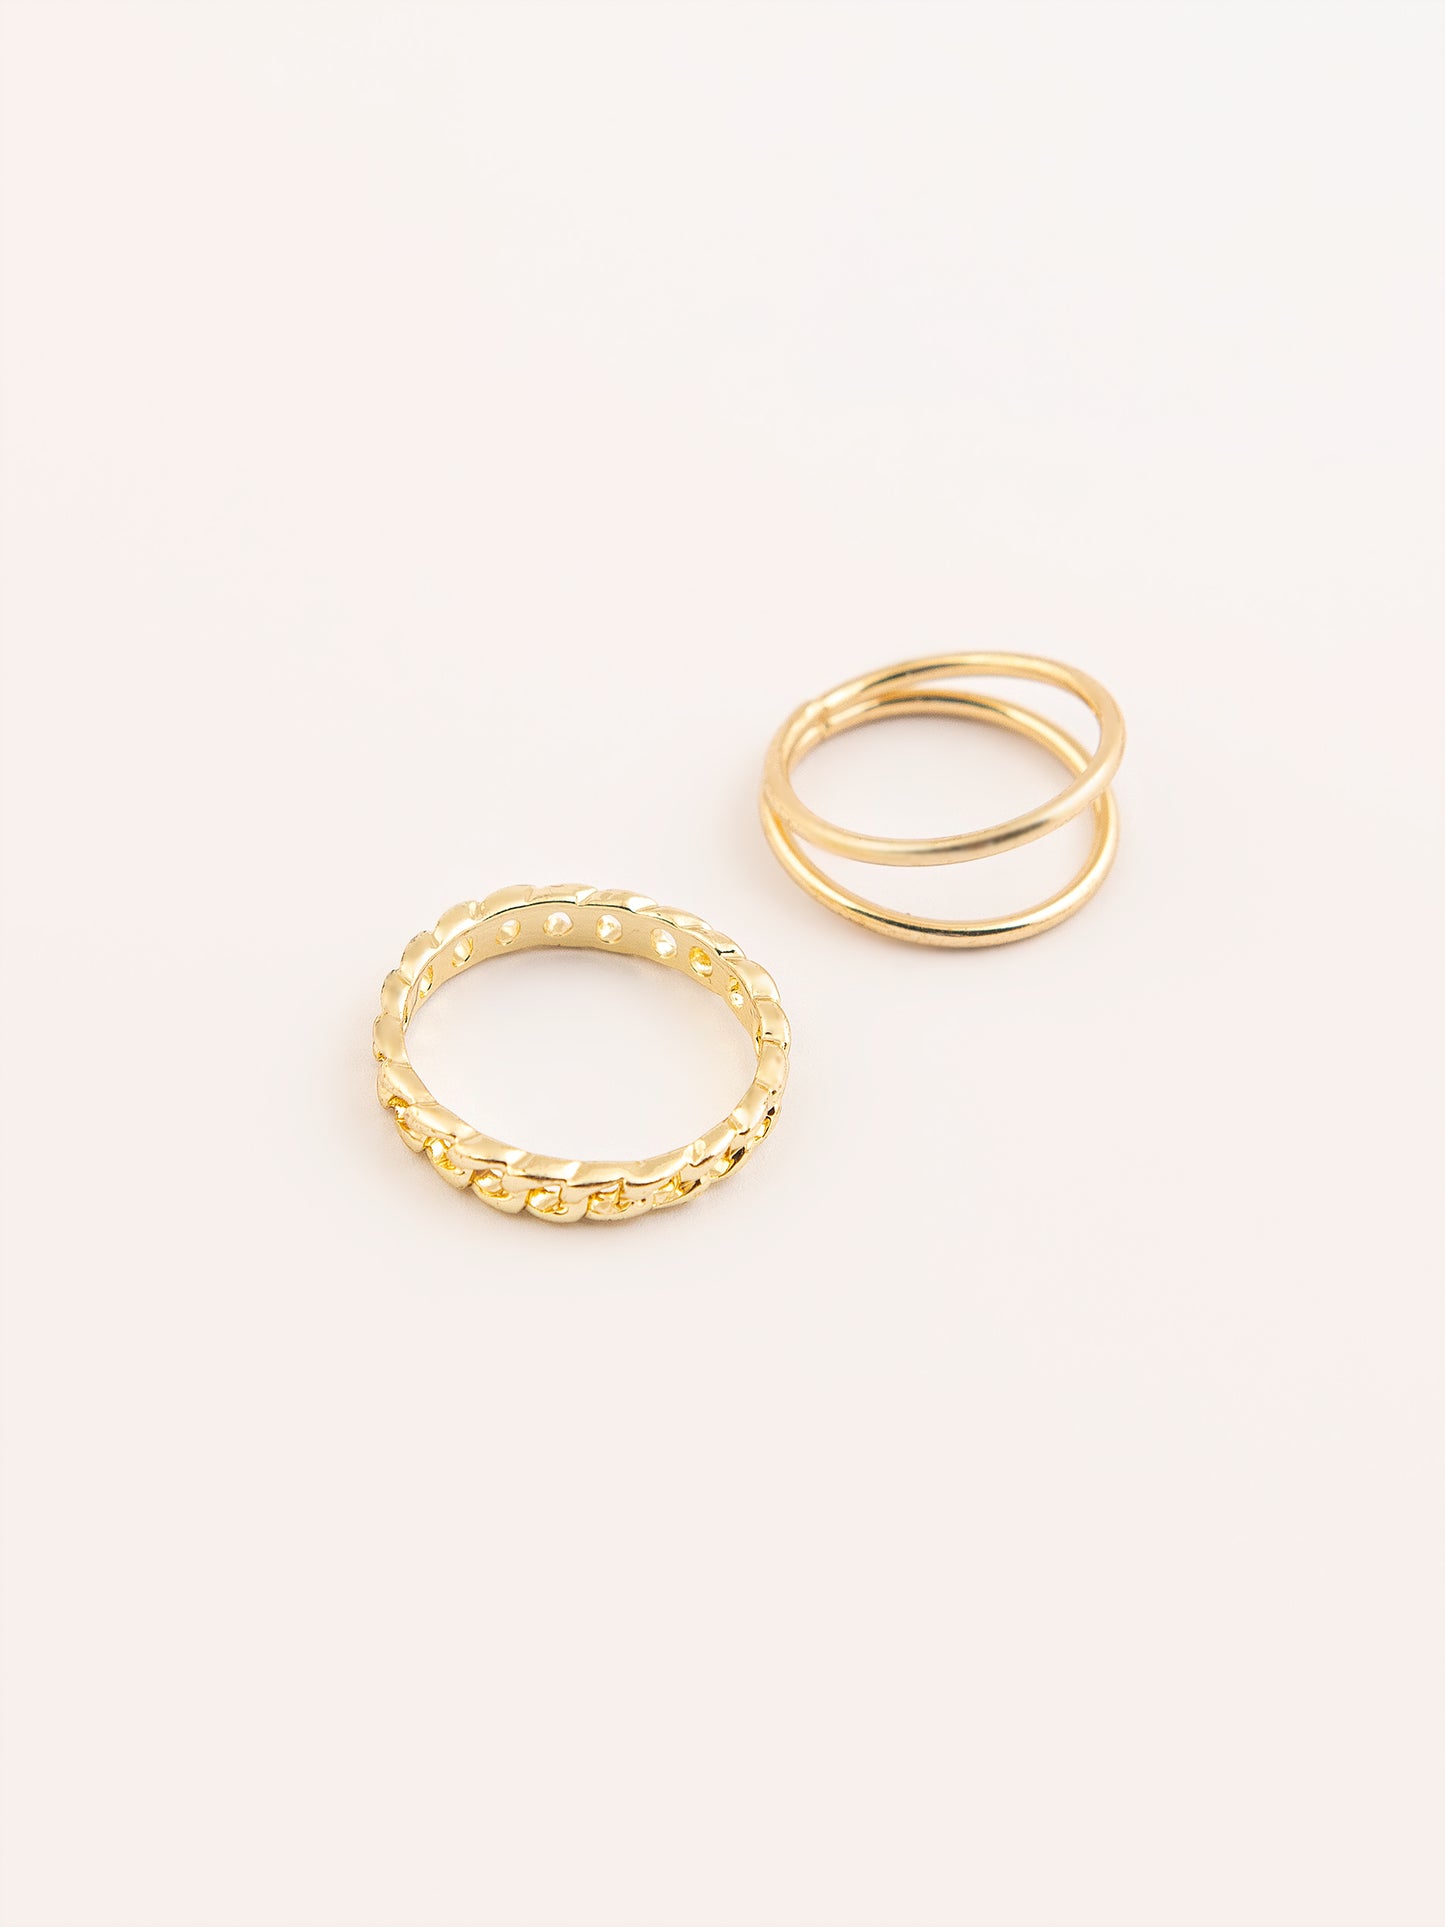 Vintage Gold Rings Set